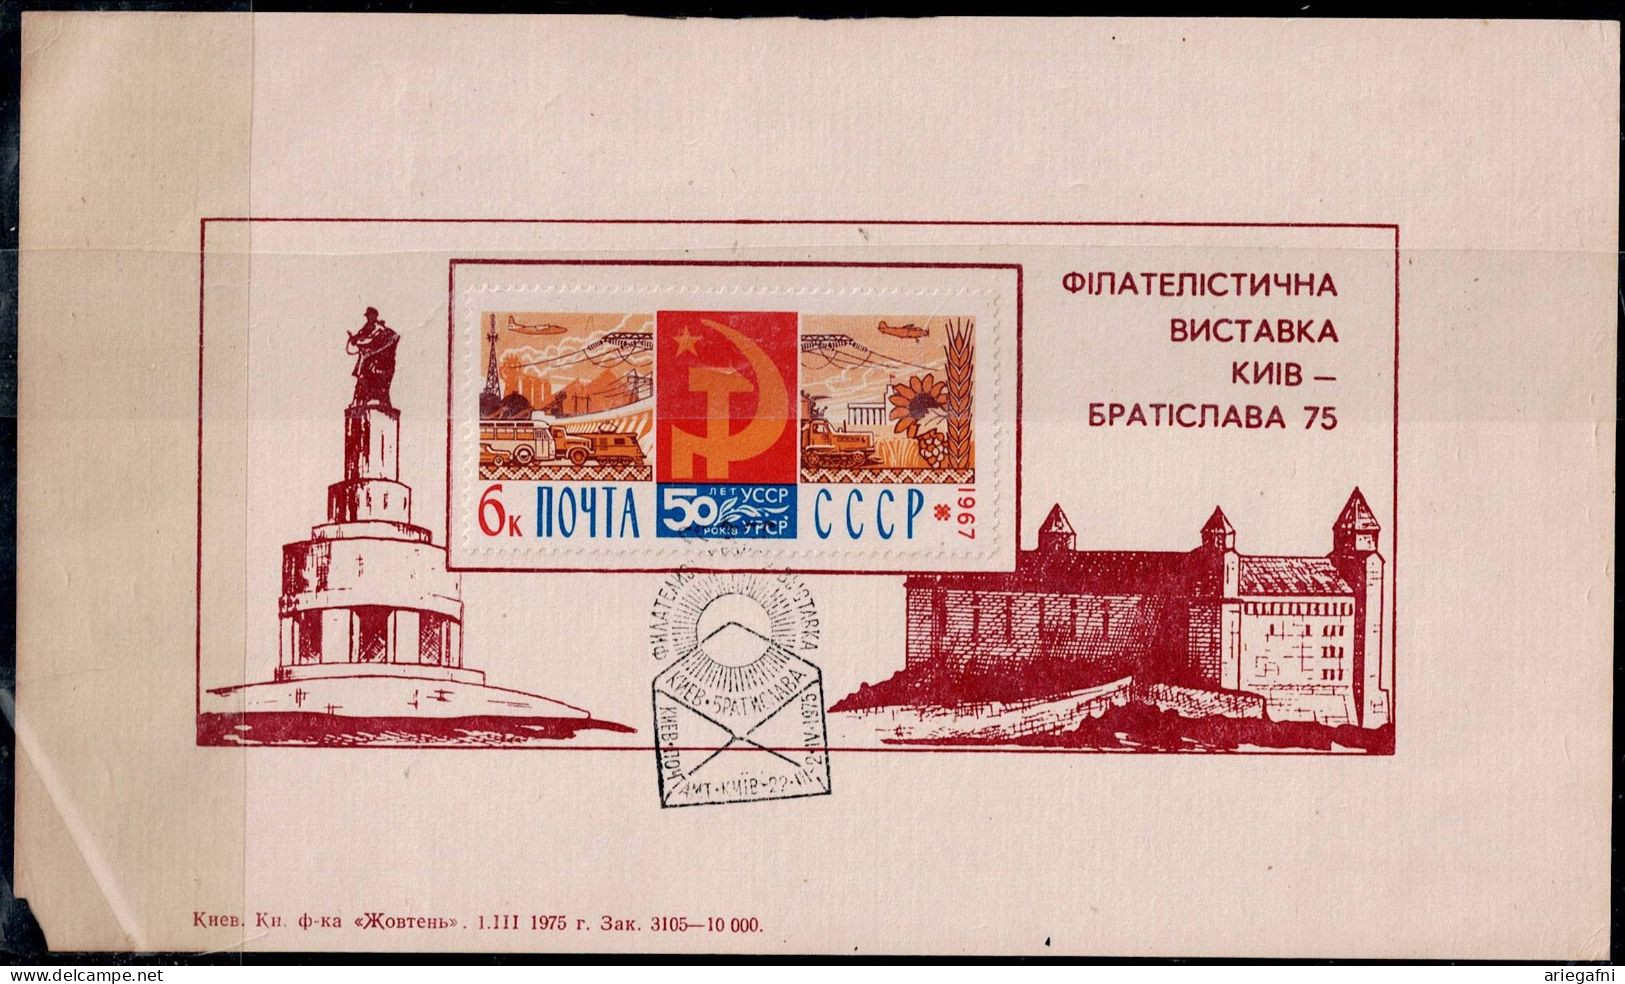 RUSSIA 1975 TICKET TO THE PHILATELIST EXHIBITION KIEV-BRATISLAVA 75 VF!! - Cartas & Documentos